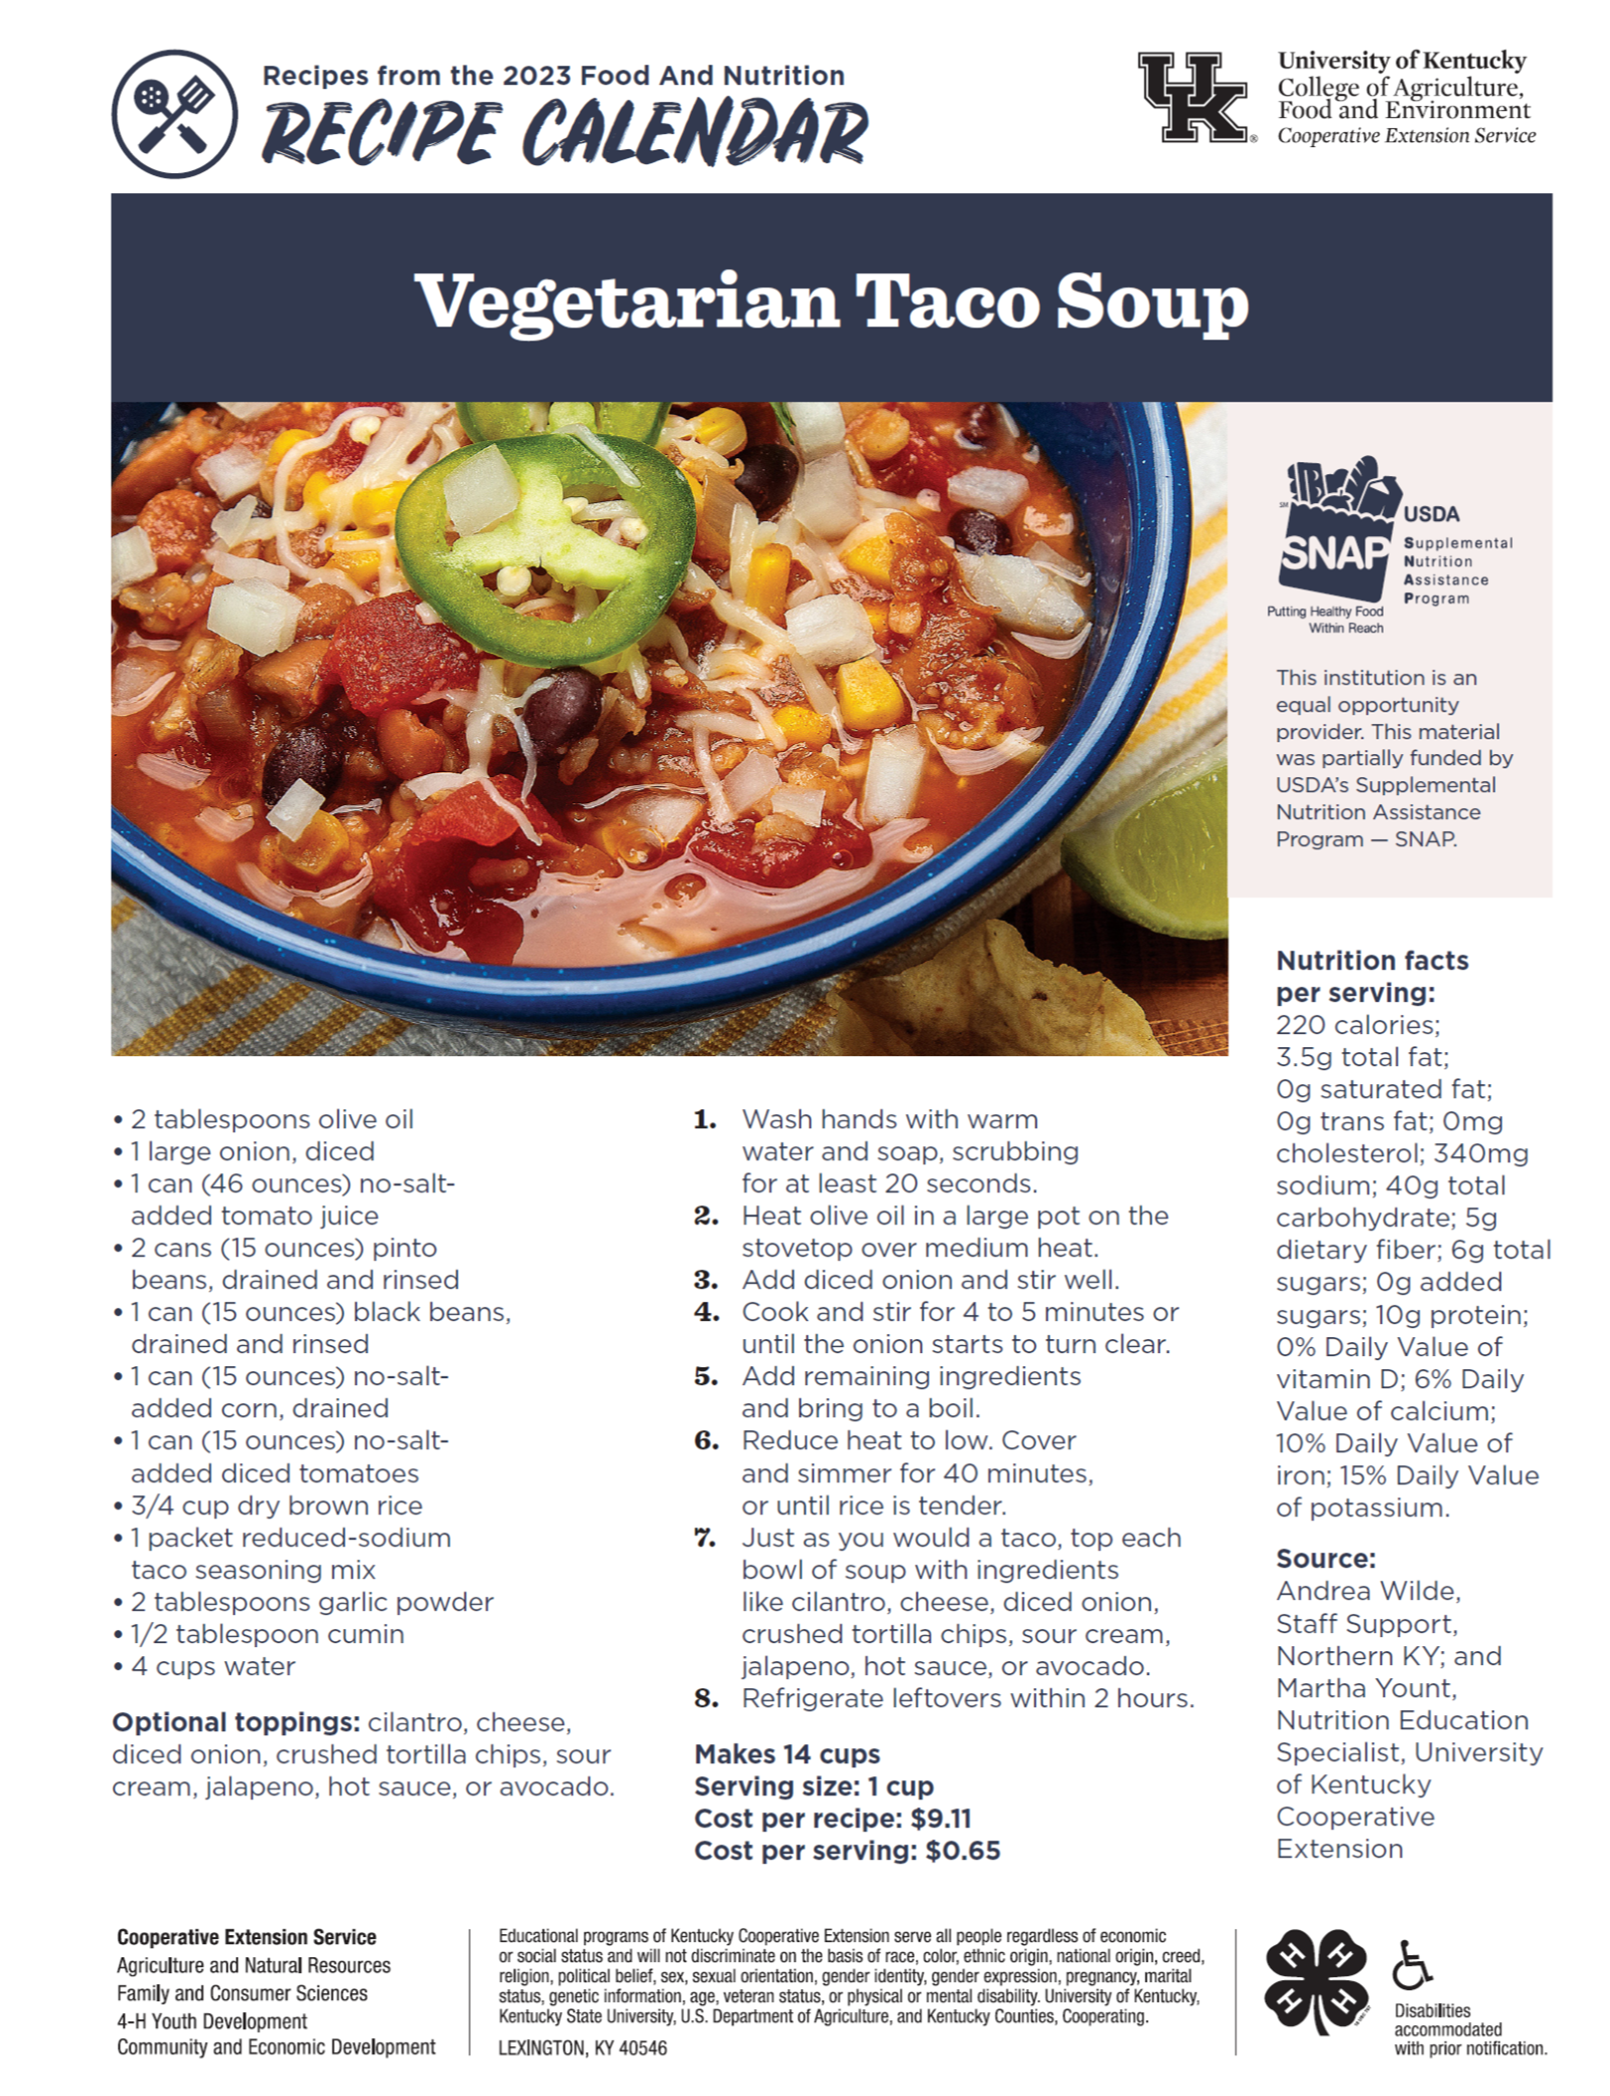 Taco Soup Recipe